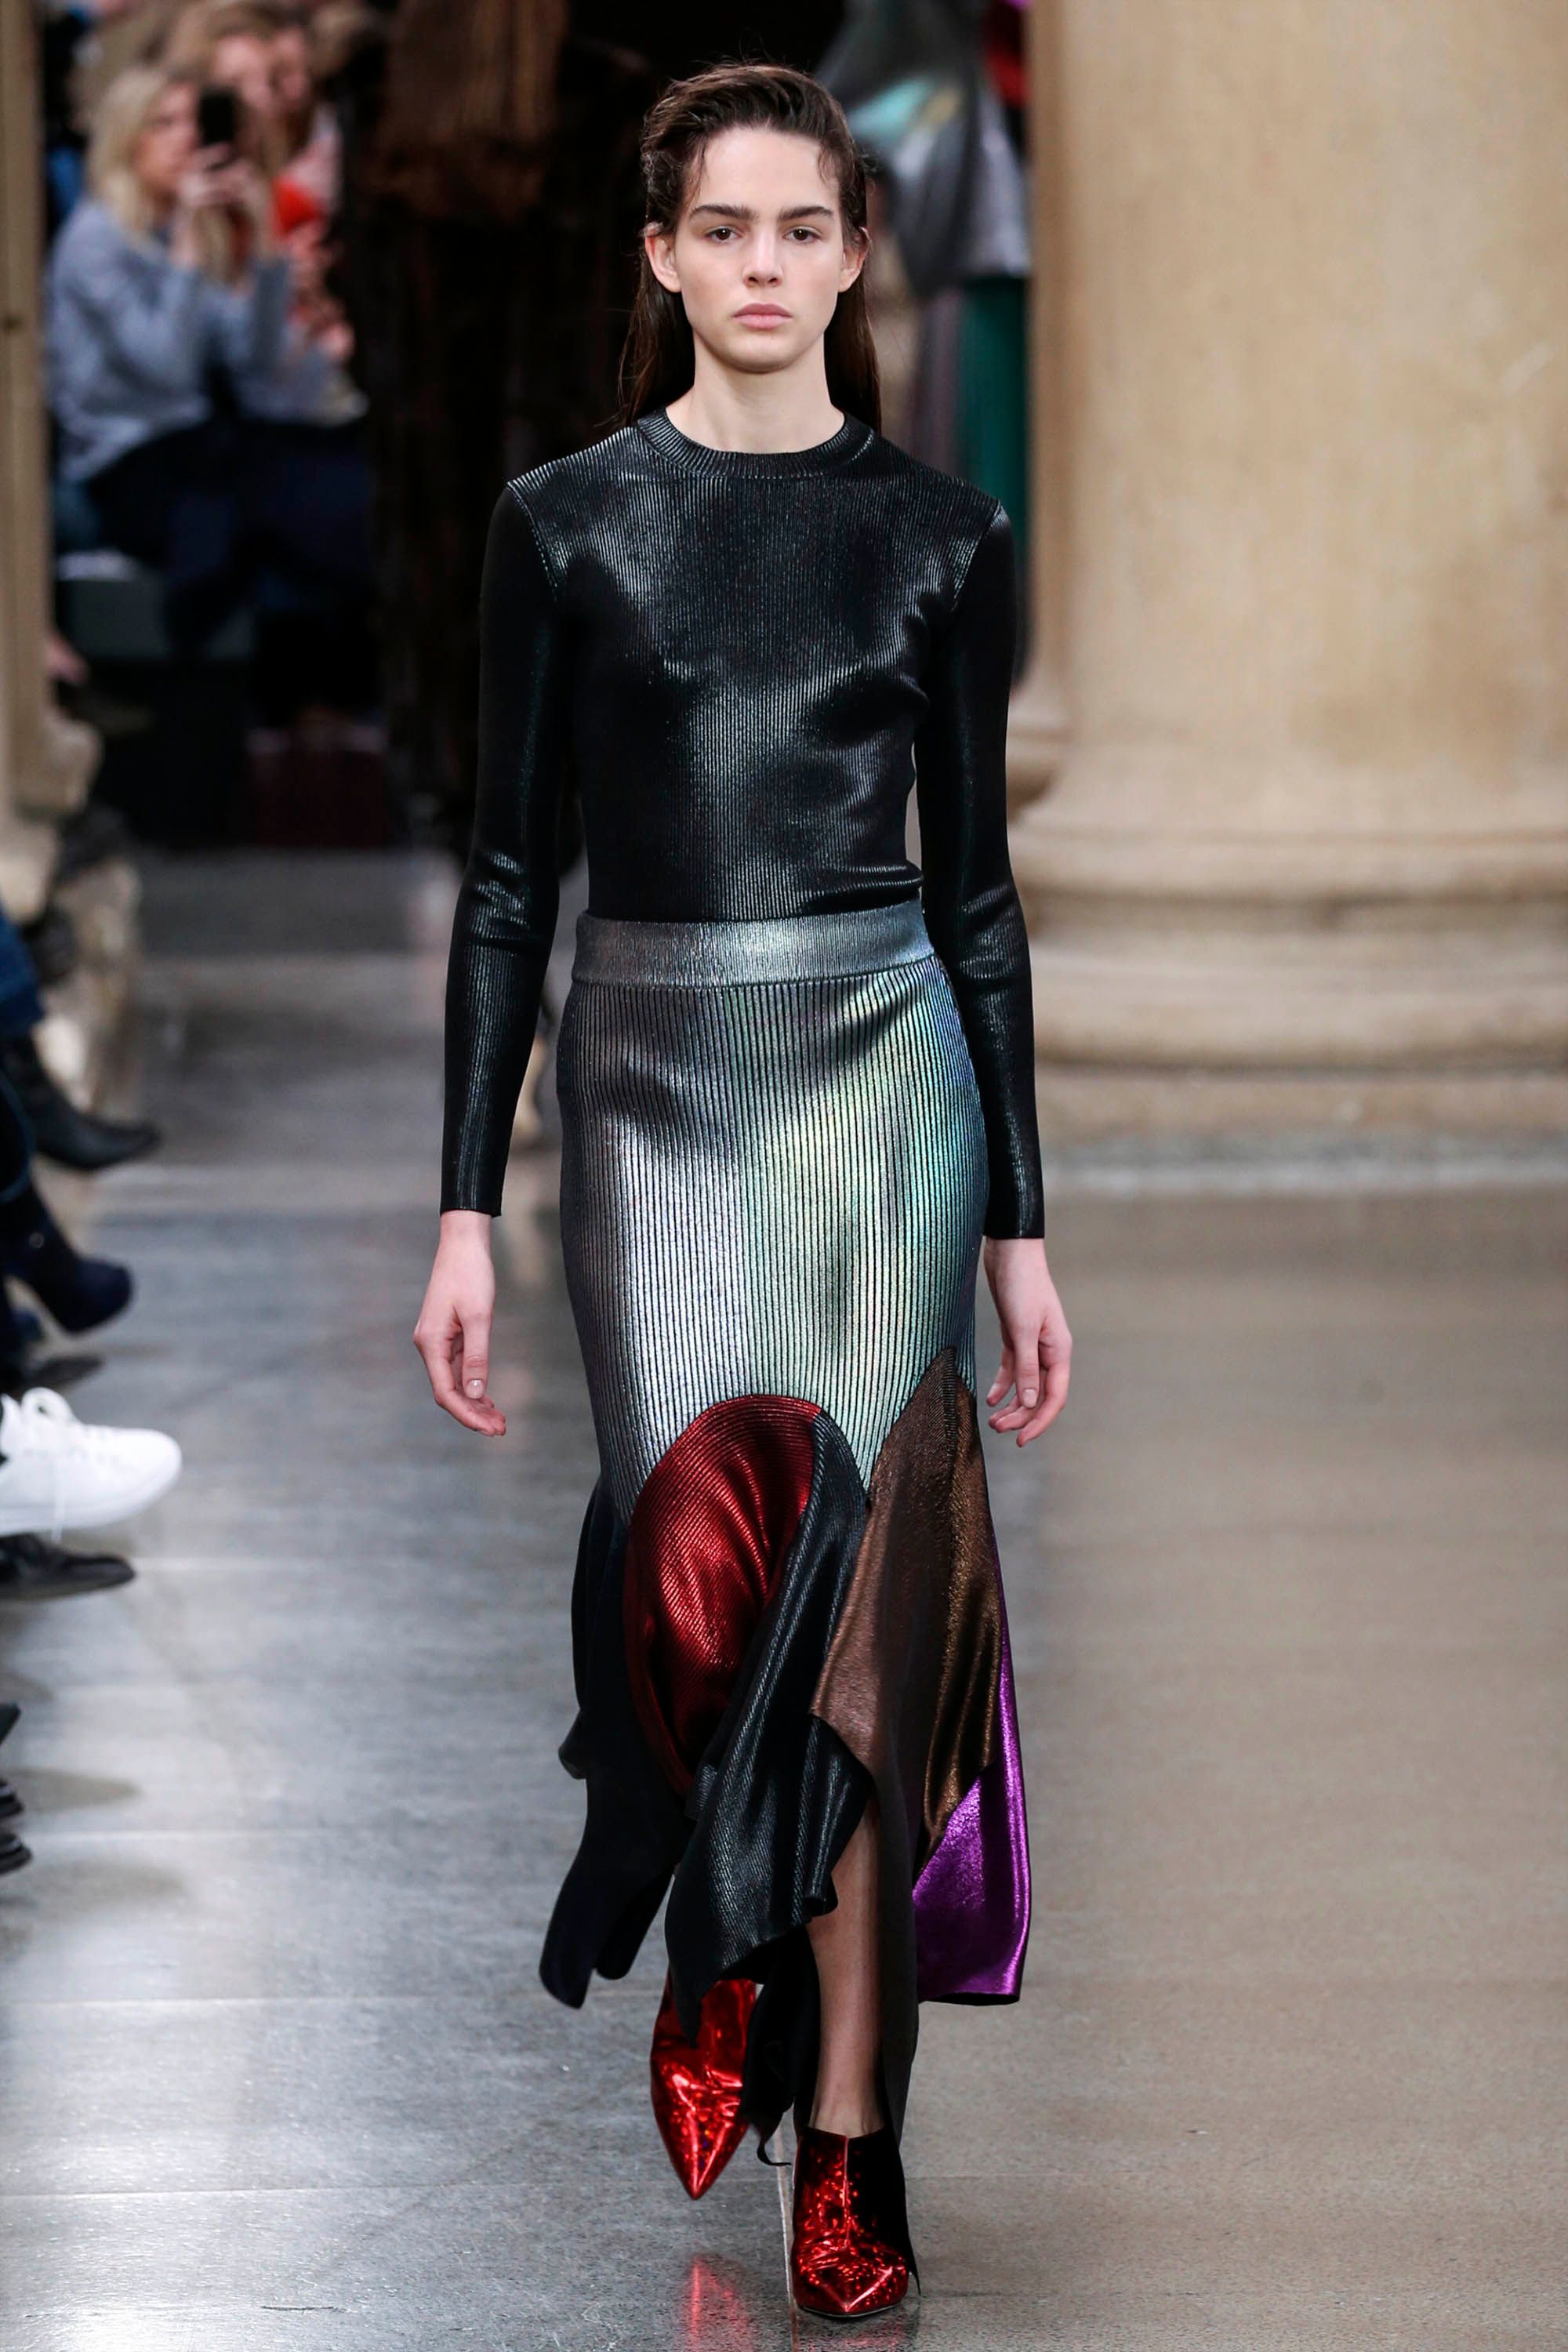 Louis Vuitton F/W 17 menswear #31 - Tagwalk: The Fashion Search Engine